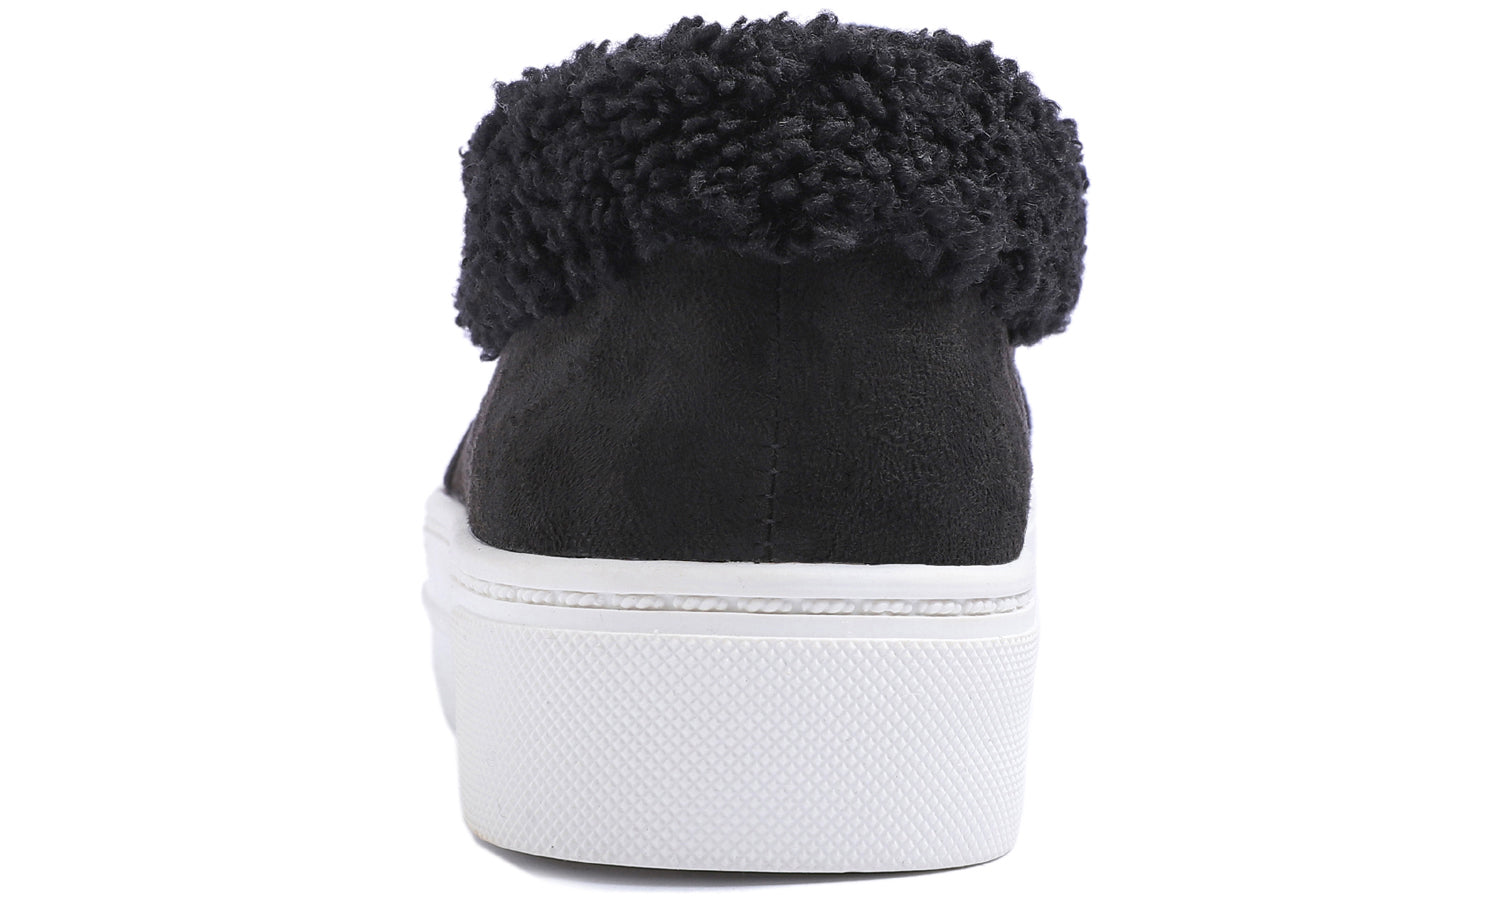 Feversole Women's Casual Slip On Sneaker Comfort Cozy Winter Warm Loafer Low Top Boot Faux Black Suede Sheerling